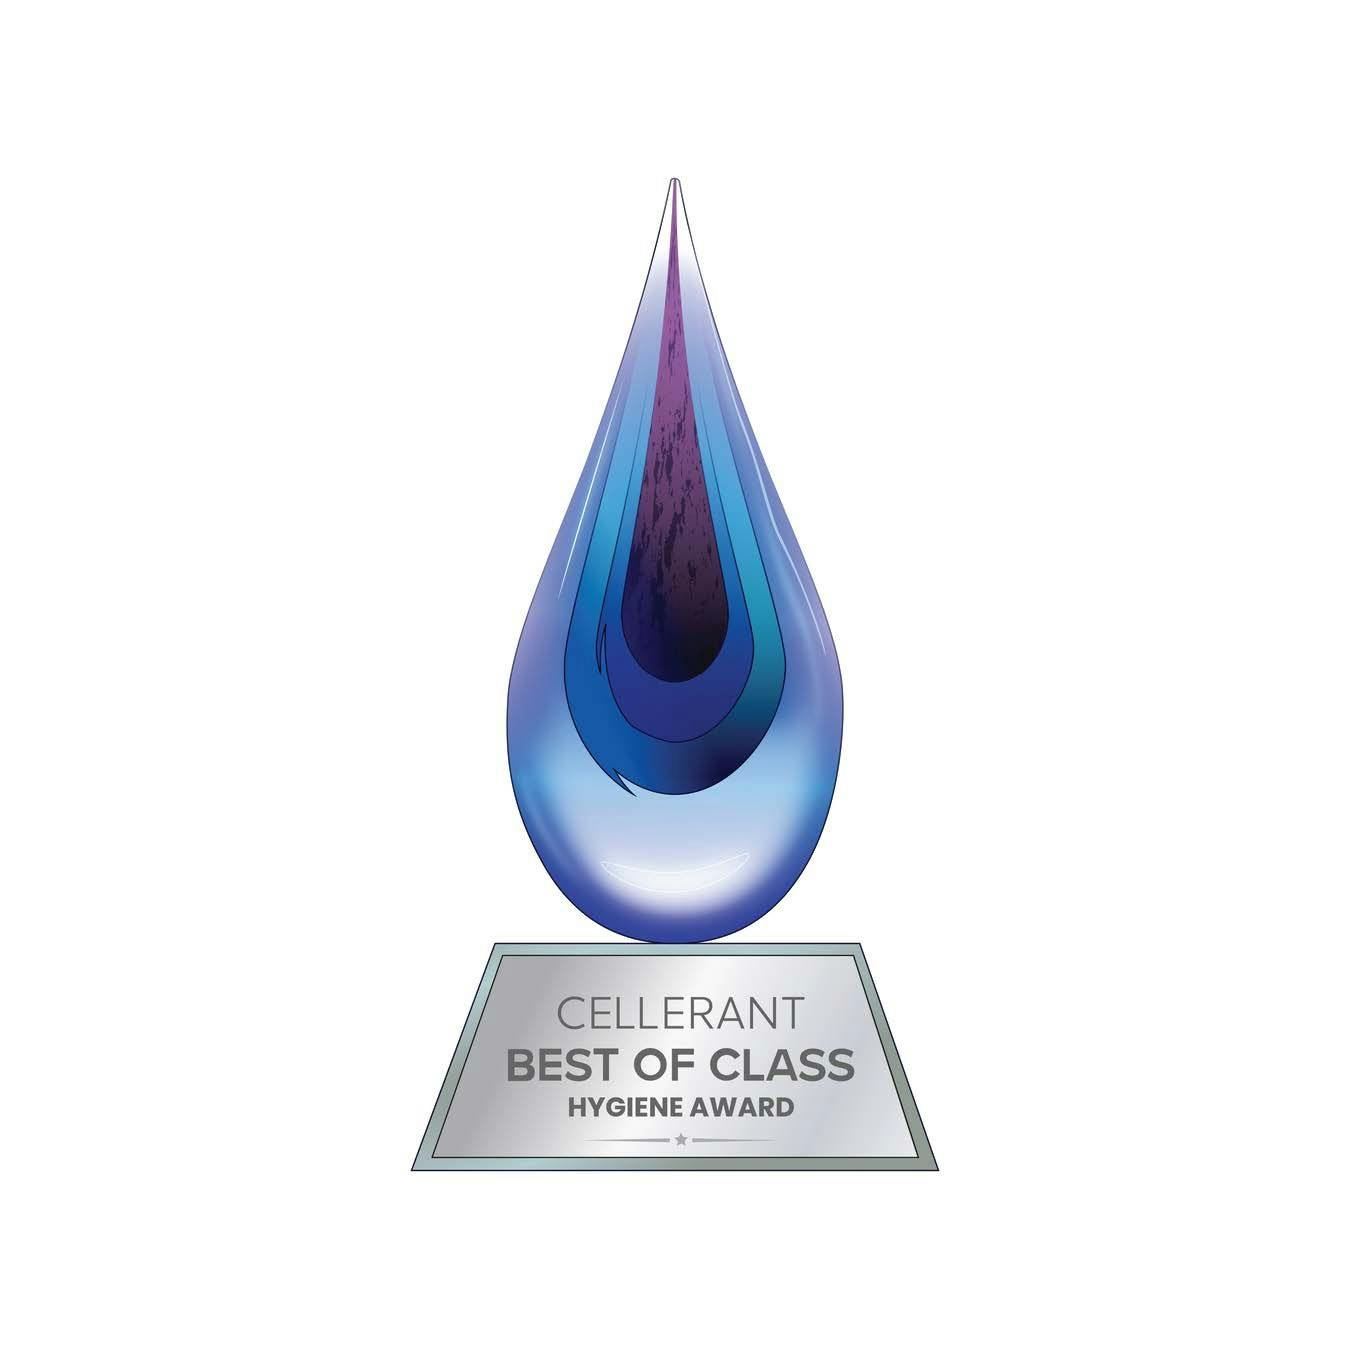 2022 Best of Class Hygiene Award Winners Announced